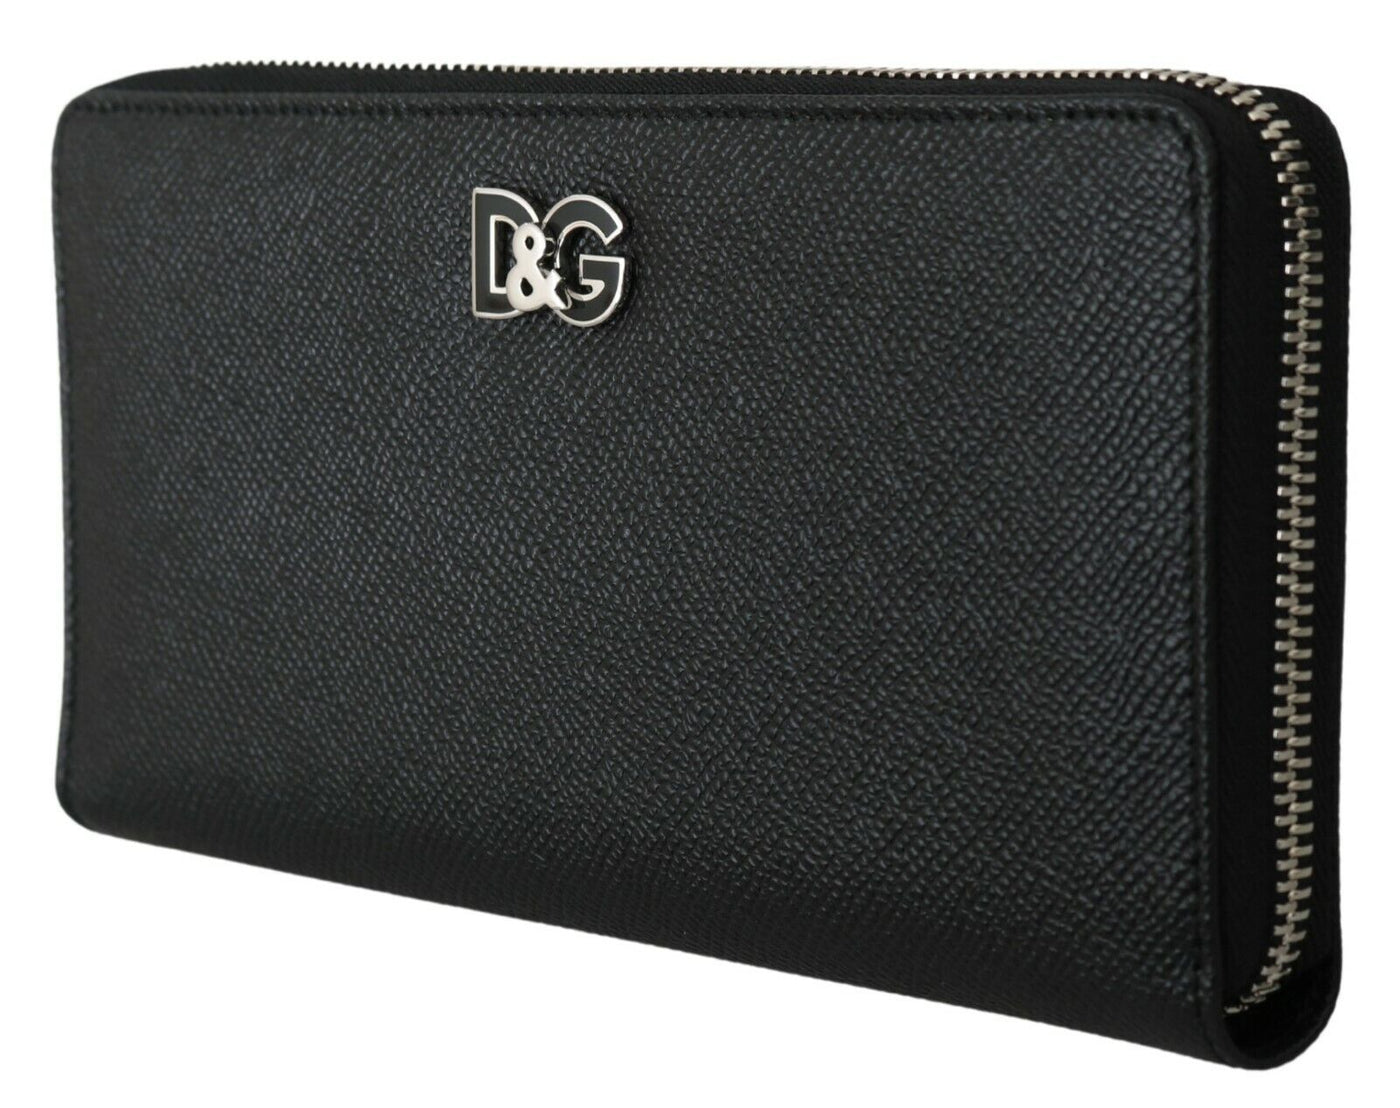 Dolce & Gabbana Black Dauphine Leather Continental Clutch Wallet